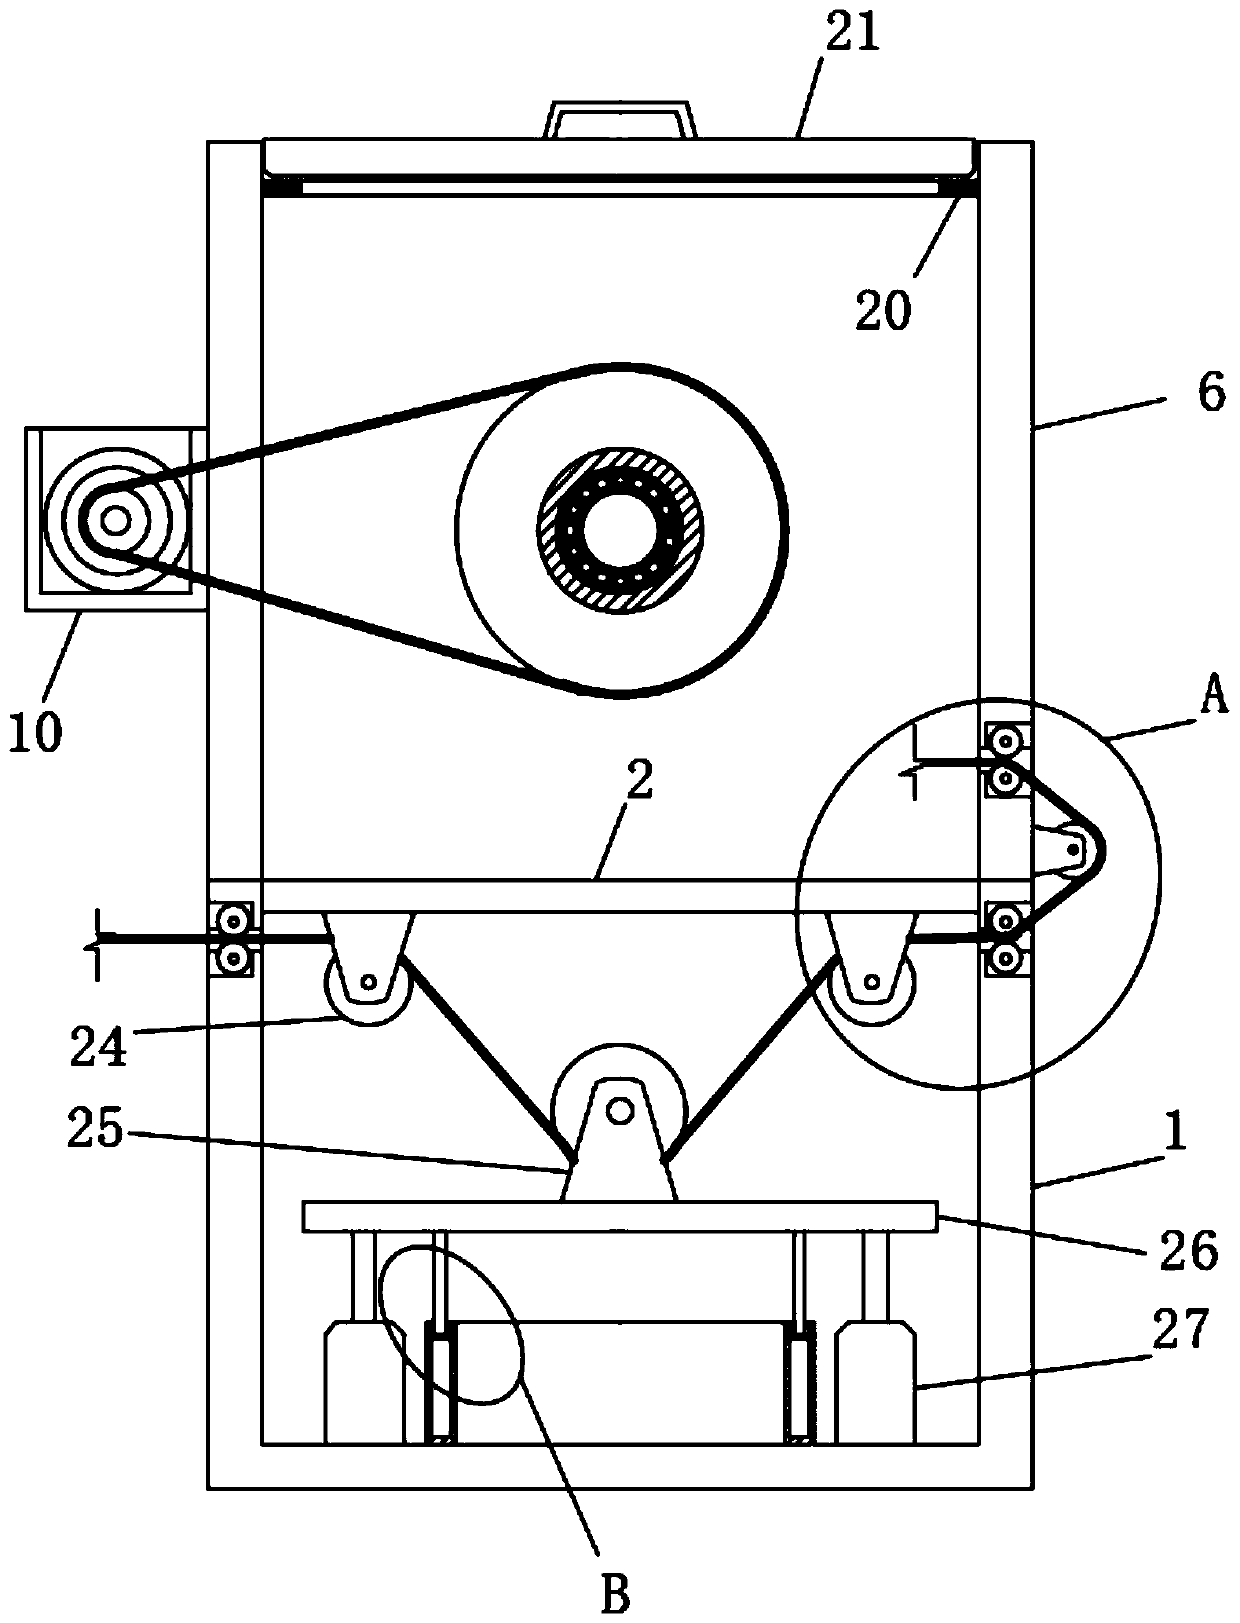 Cloth winding device with elasticizing mechanism